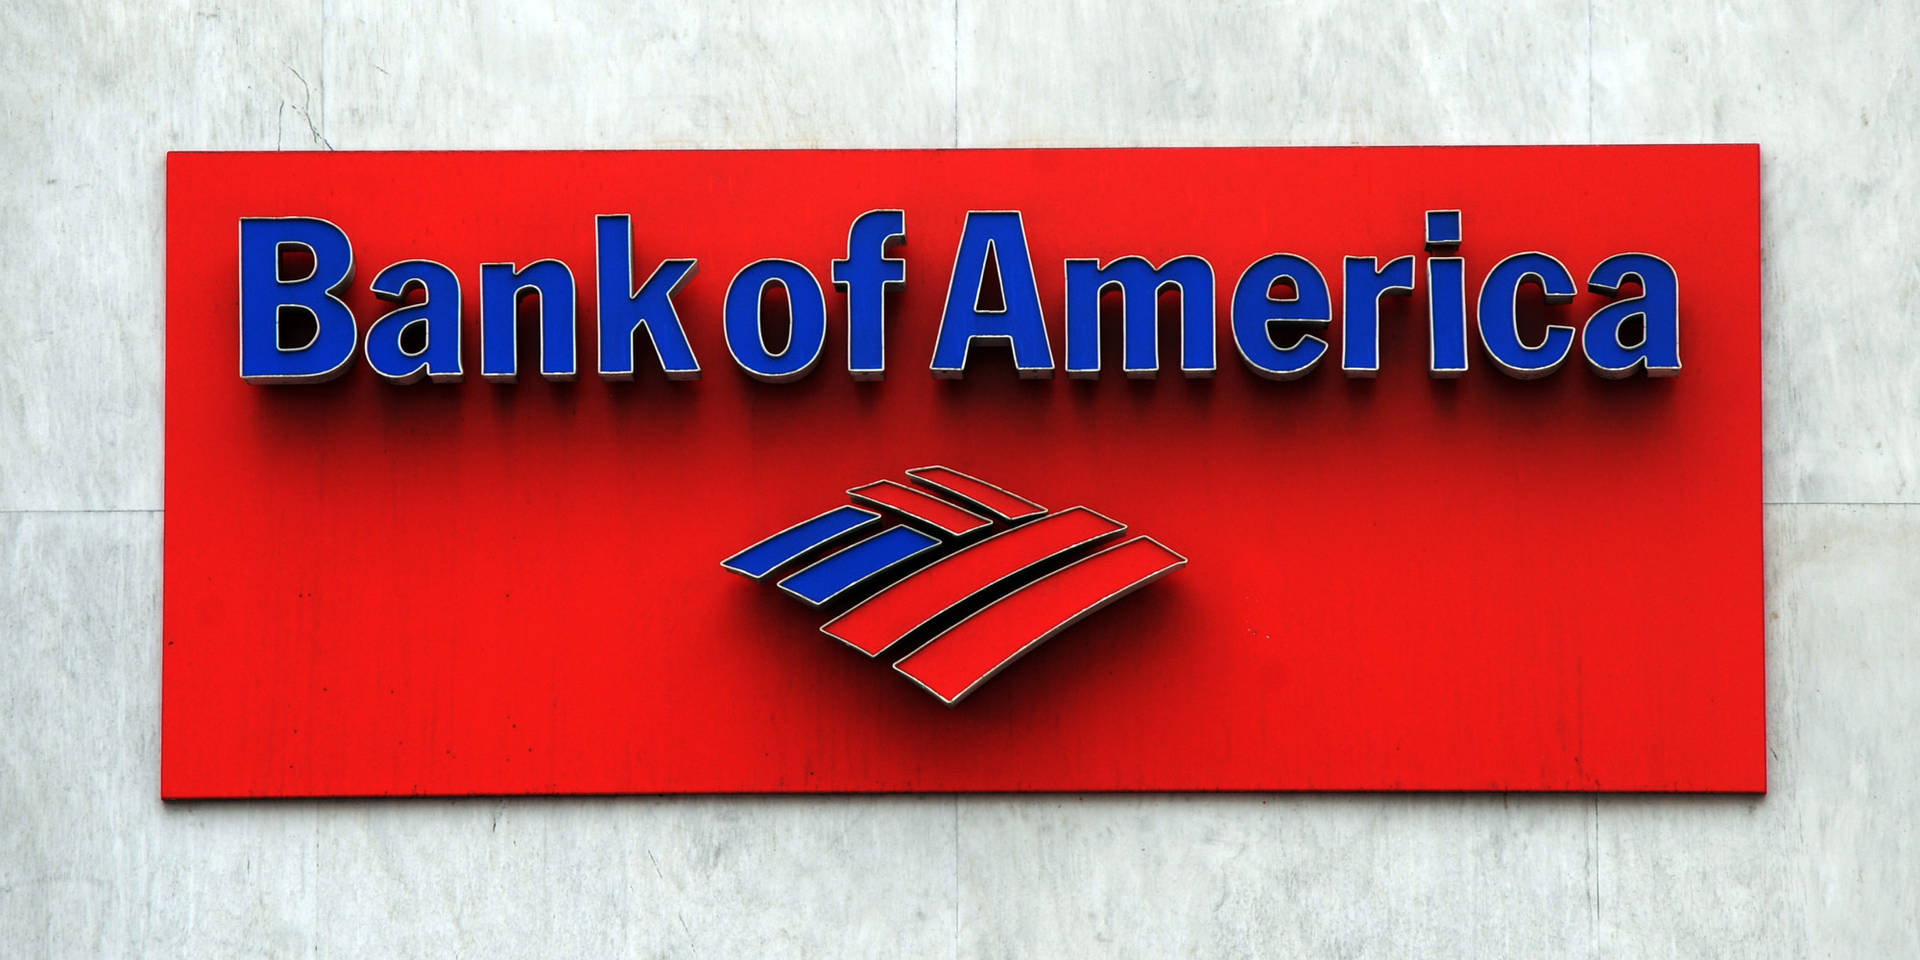 Bank Of America Name And Logo Wallpaper